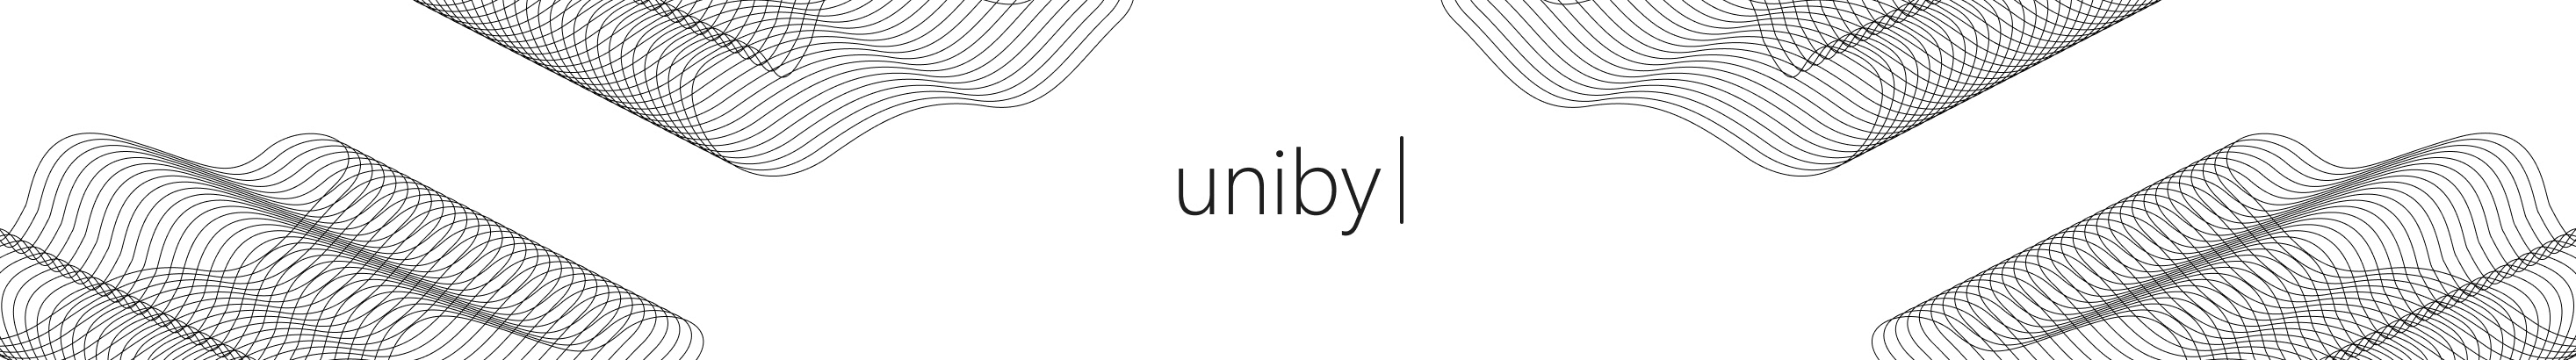 Uniby (Denis Nikiforov)'s profile banner